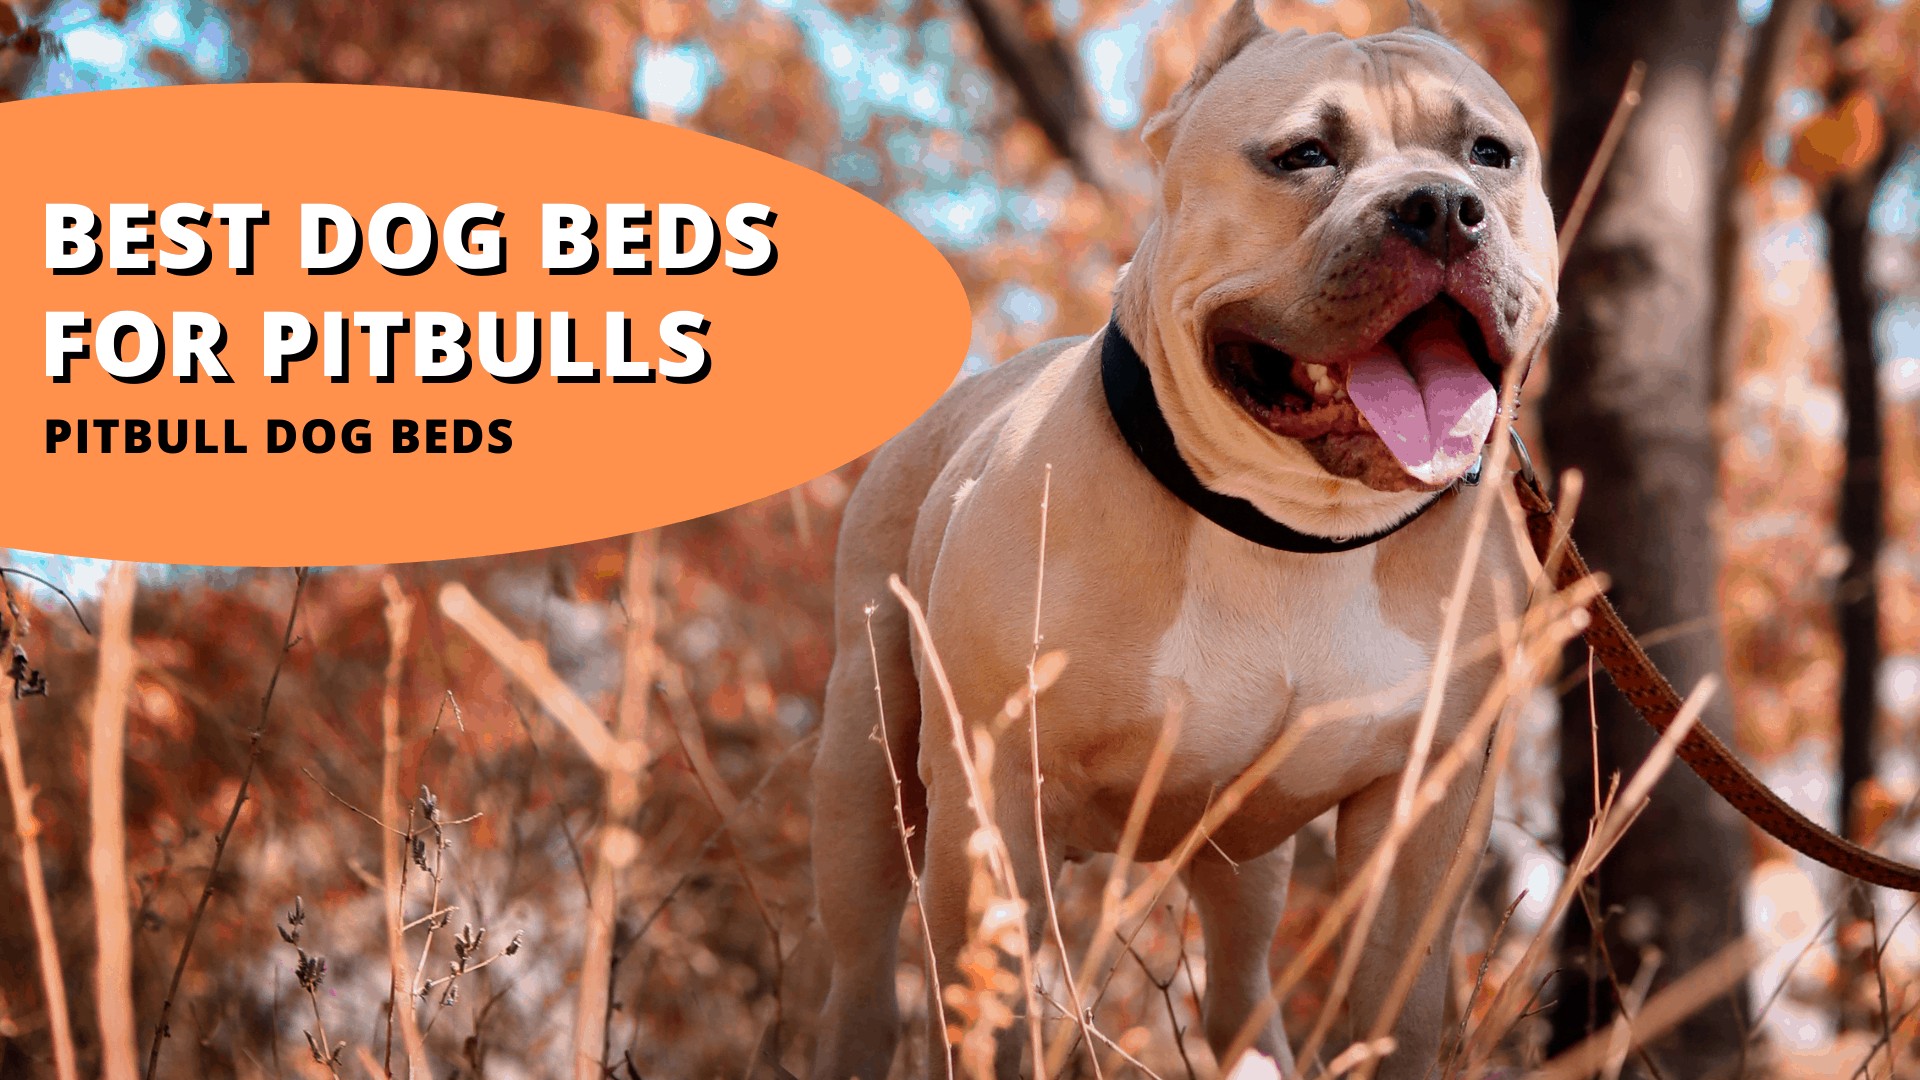 Best dog beds for pitbulls